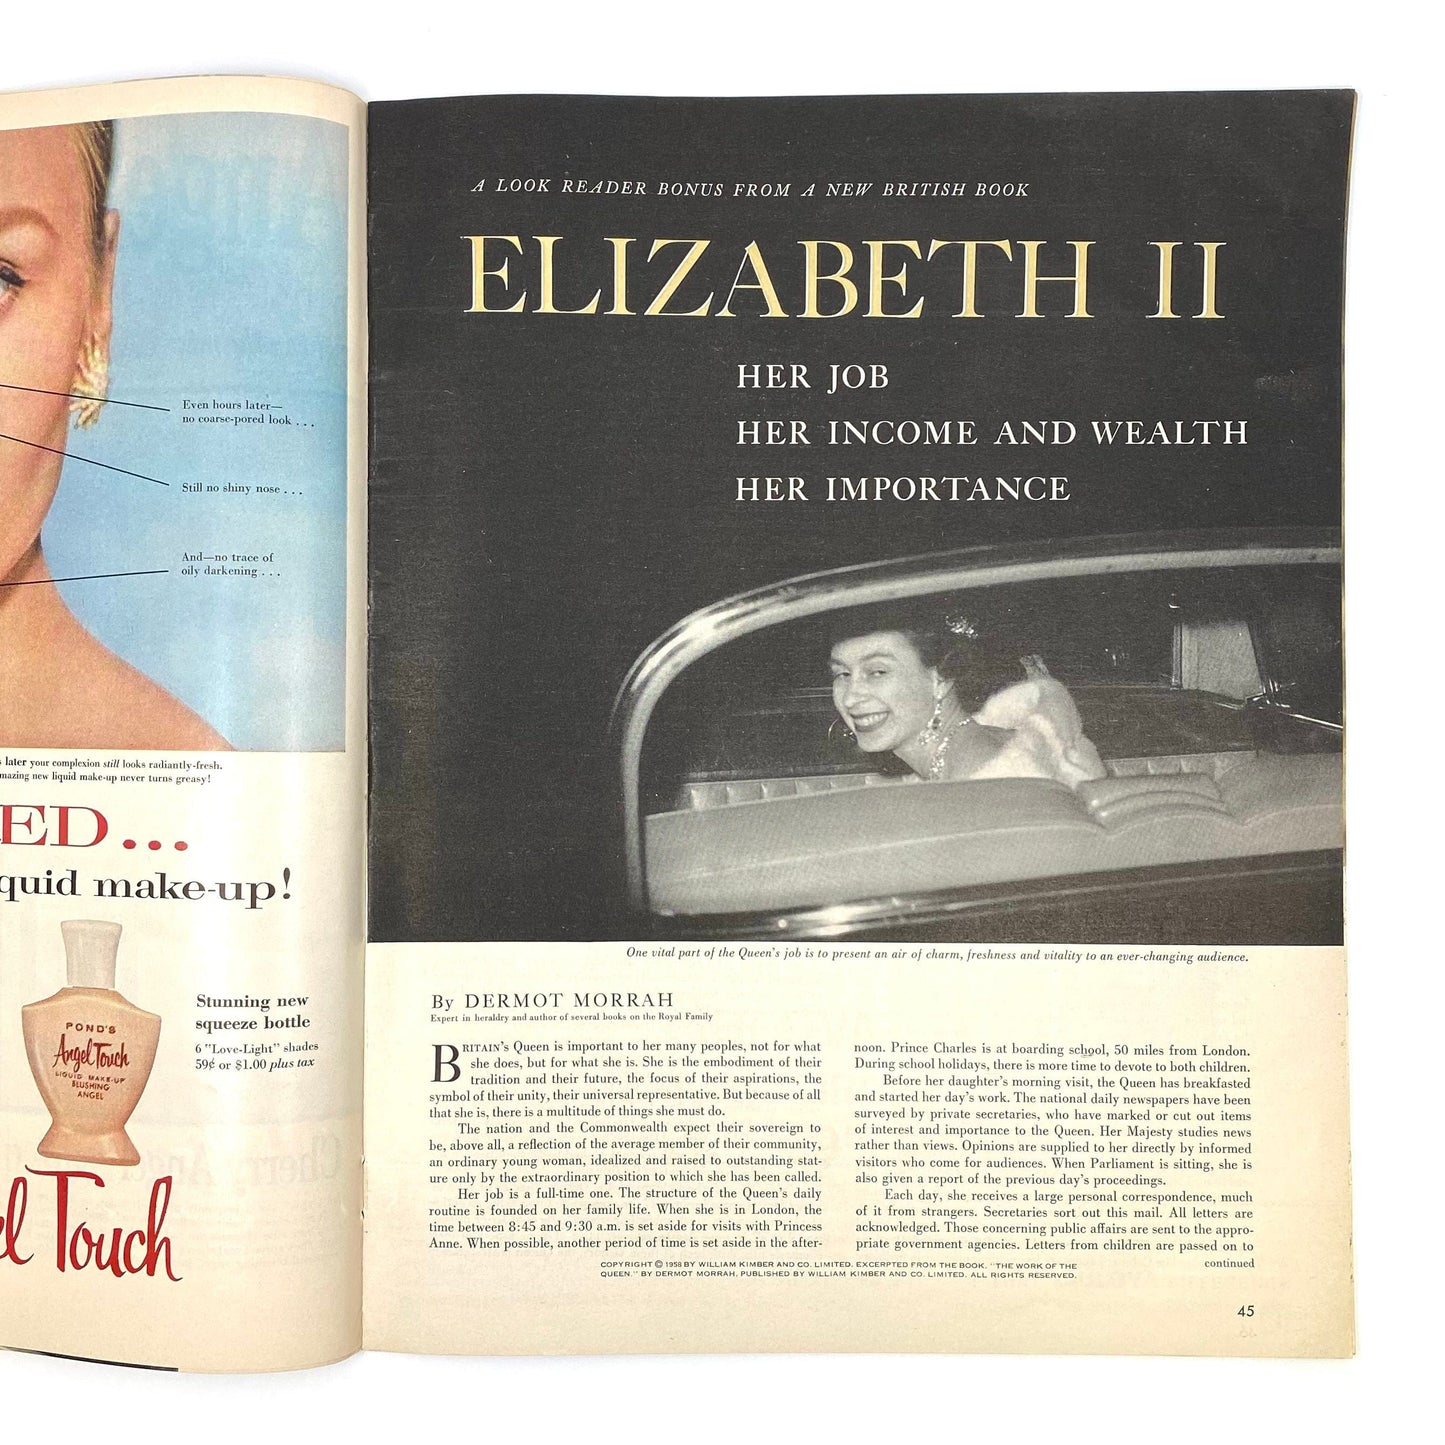 Vintage LOOK Magazine “A NEW BOOK CONDENSATION ELIZABETH II HER WORK AND HER WORRIES” - Dec 9, 1958